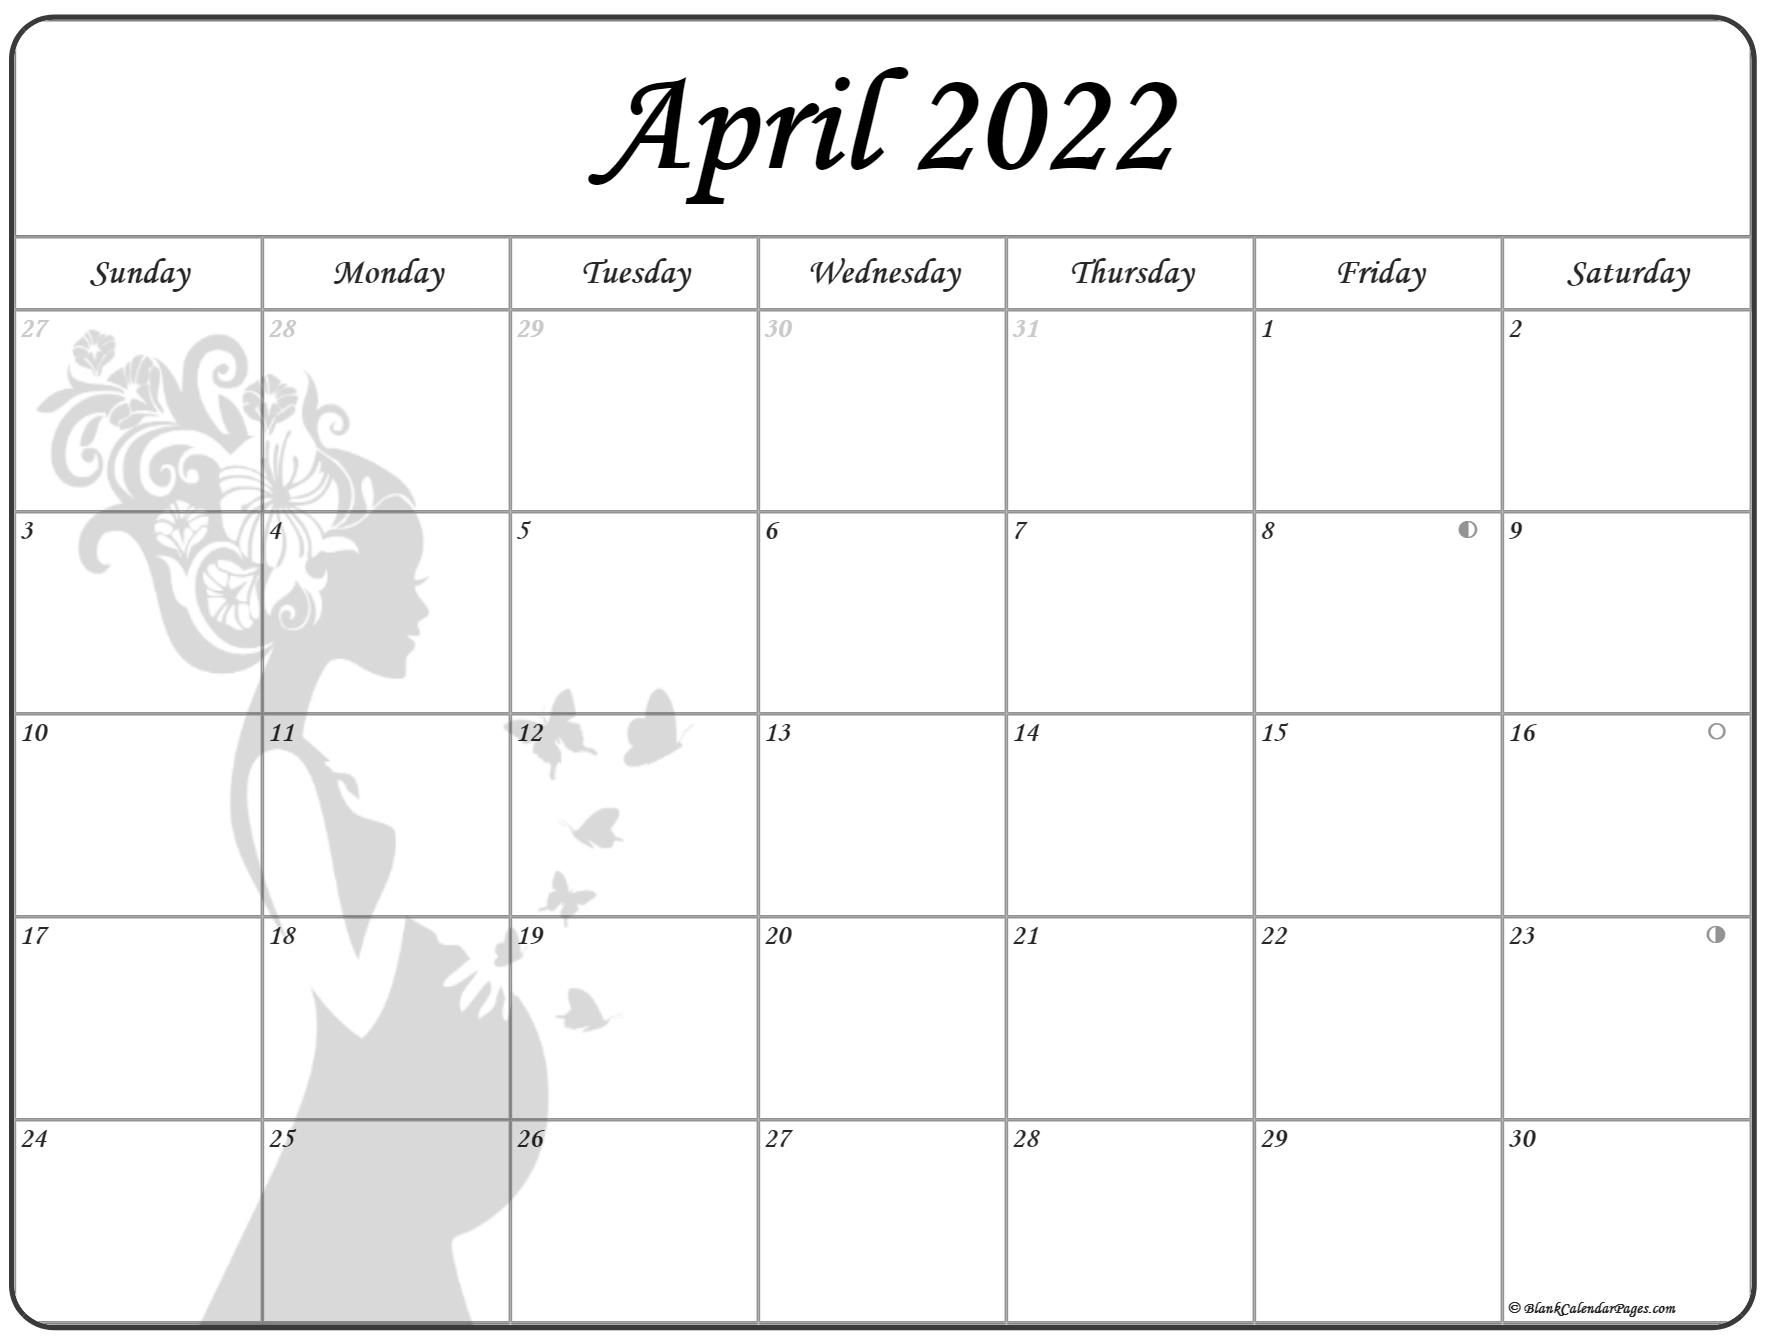 April 2022 Pregnancy Calendar | Fertility Calendar